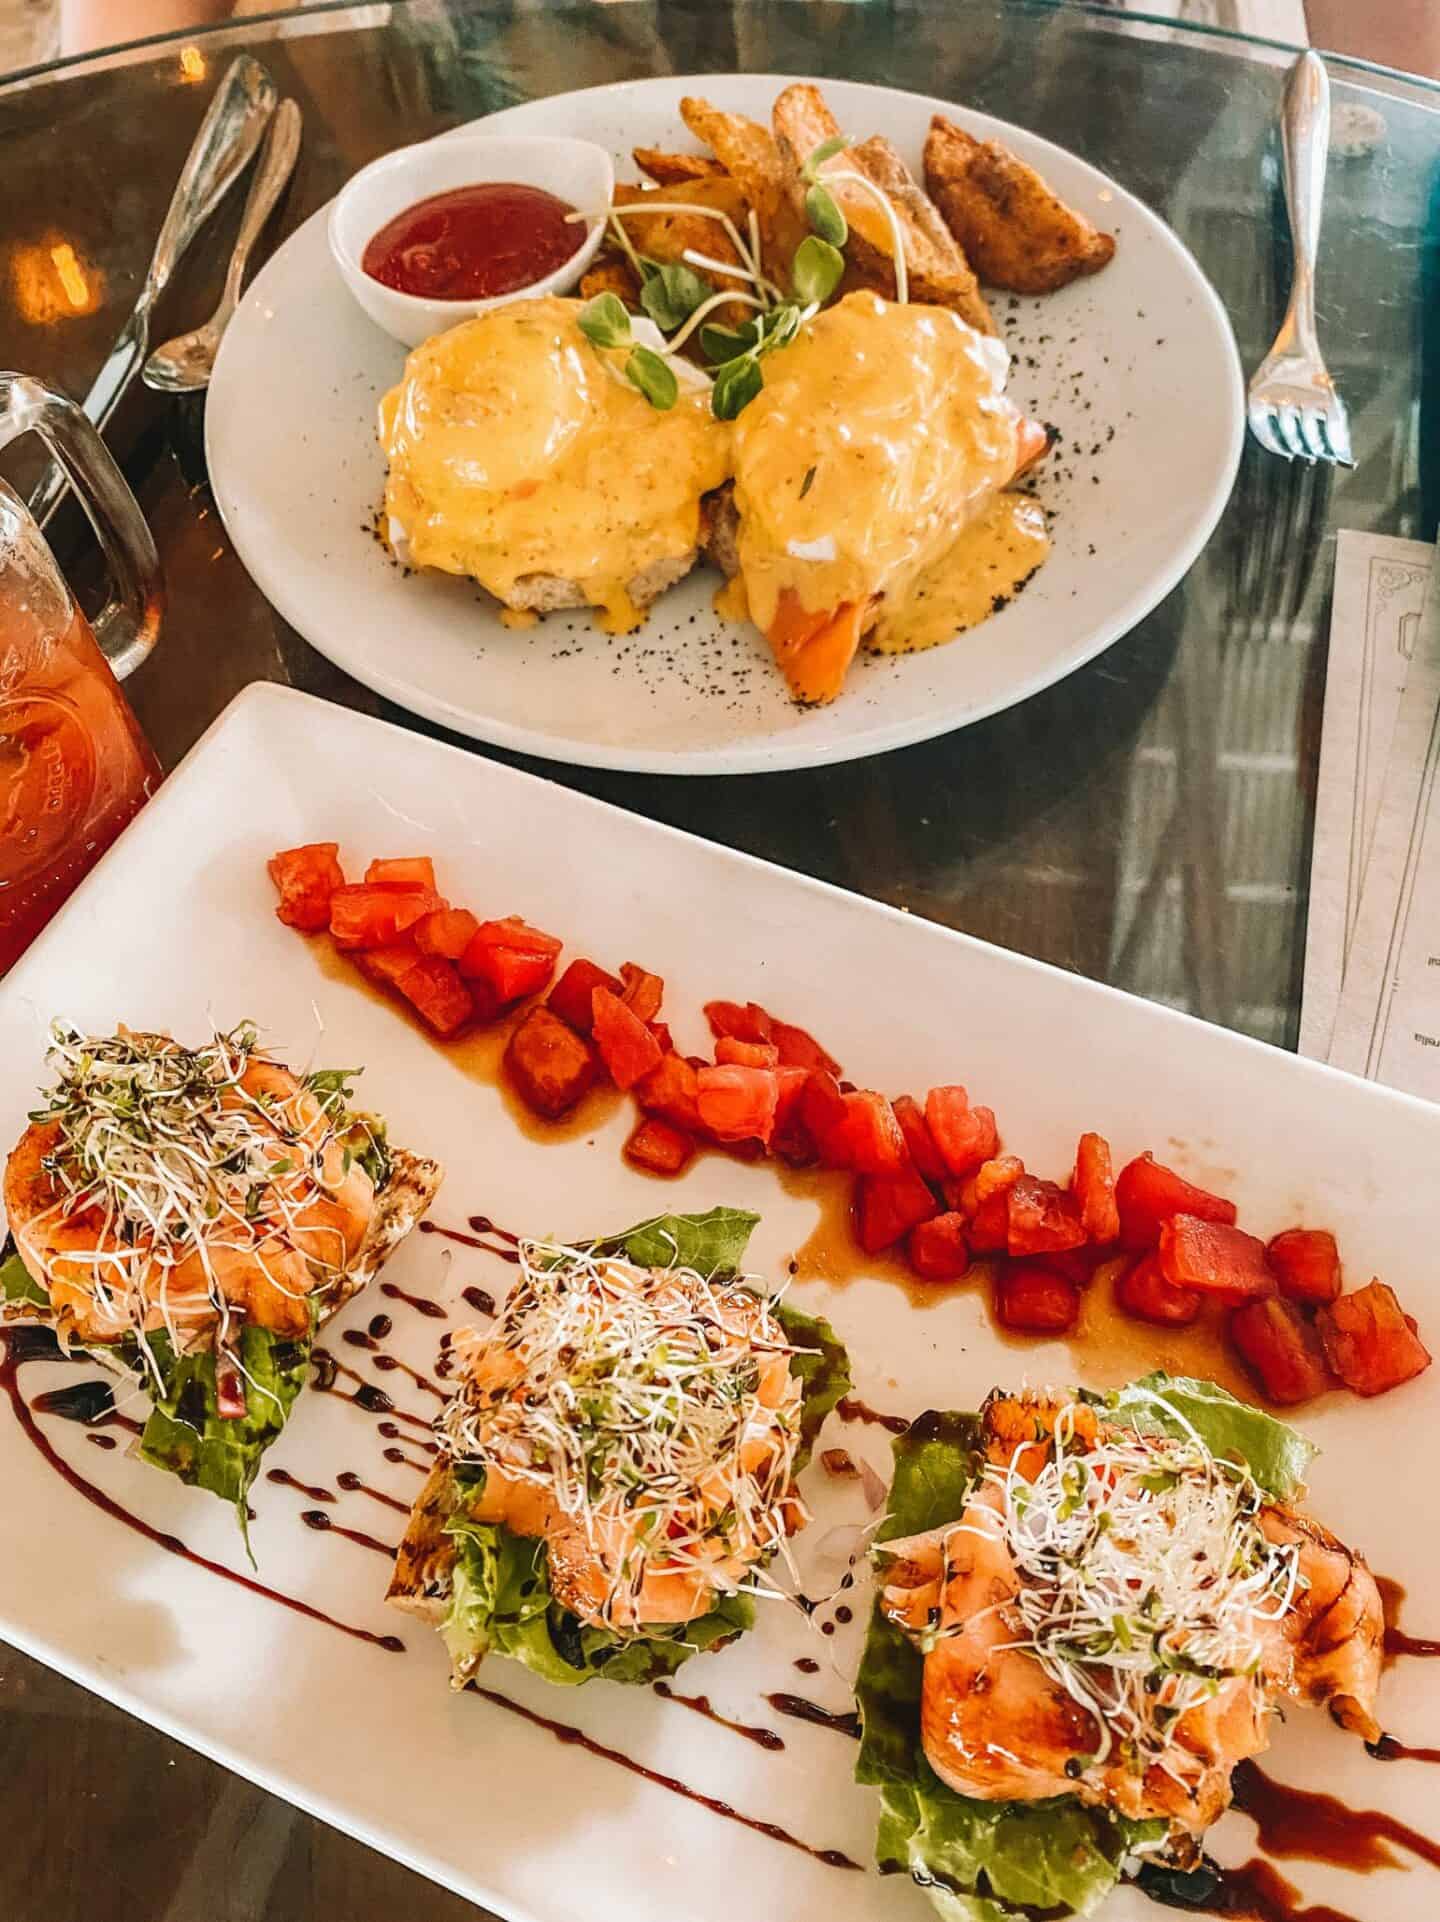 Bottomless mimos brunch at San Simon Beach Club – one of the best restaurants in Roatan 